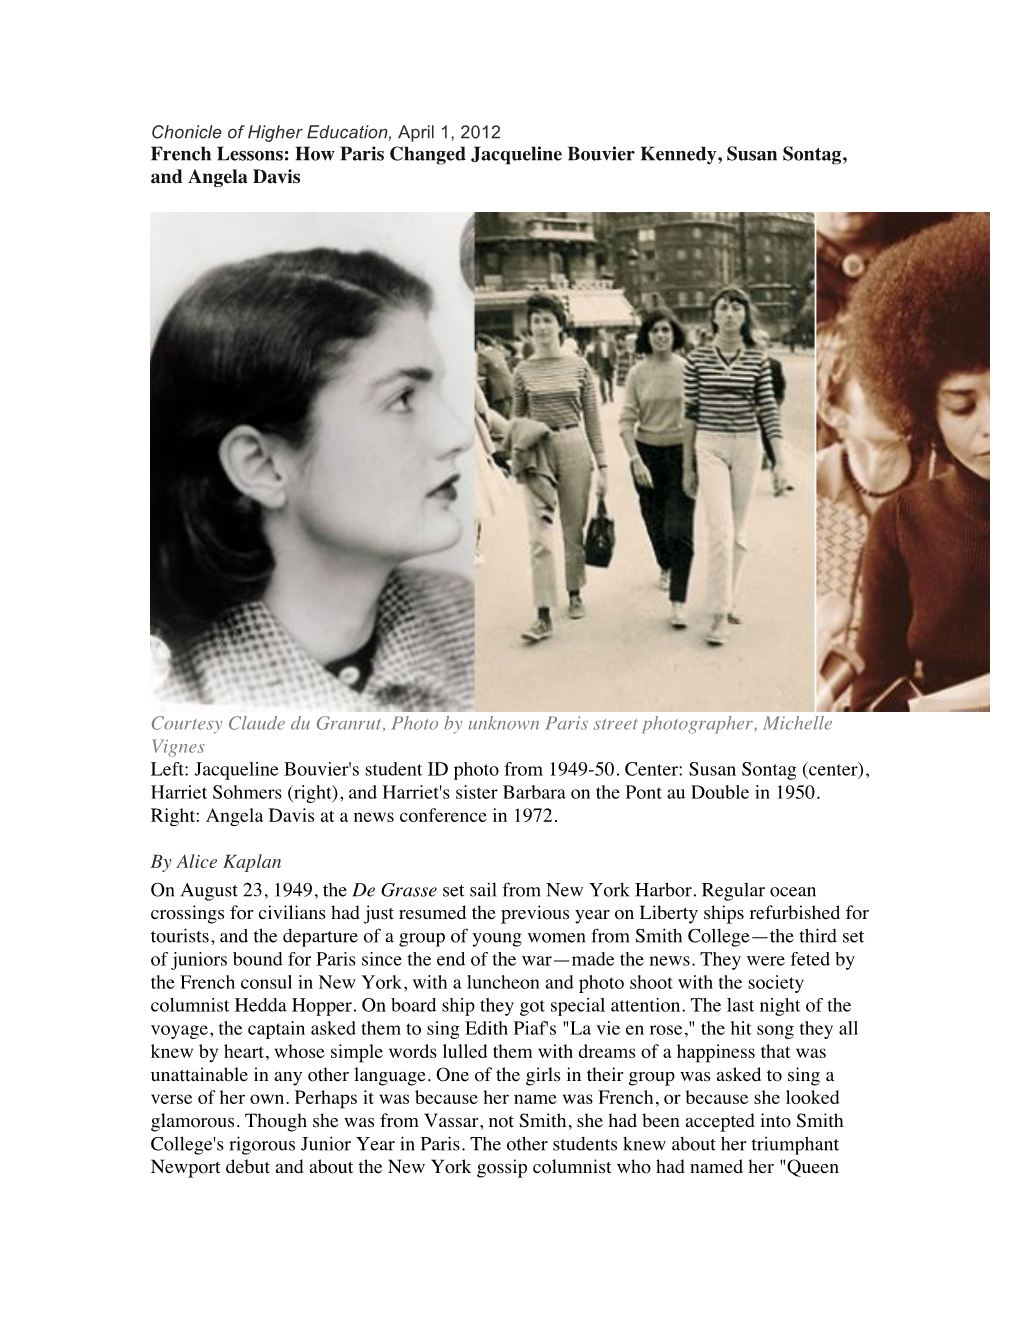 How Paris Changed Jacqueline Bouvier Kennedy, Susan Sontag, and Angela Davis